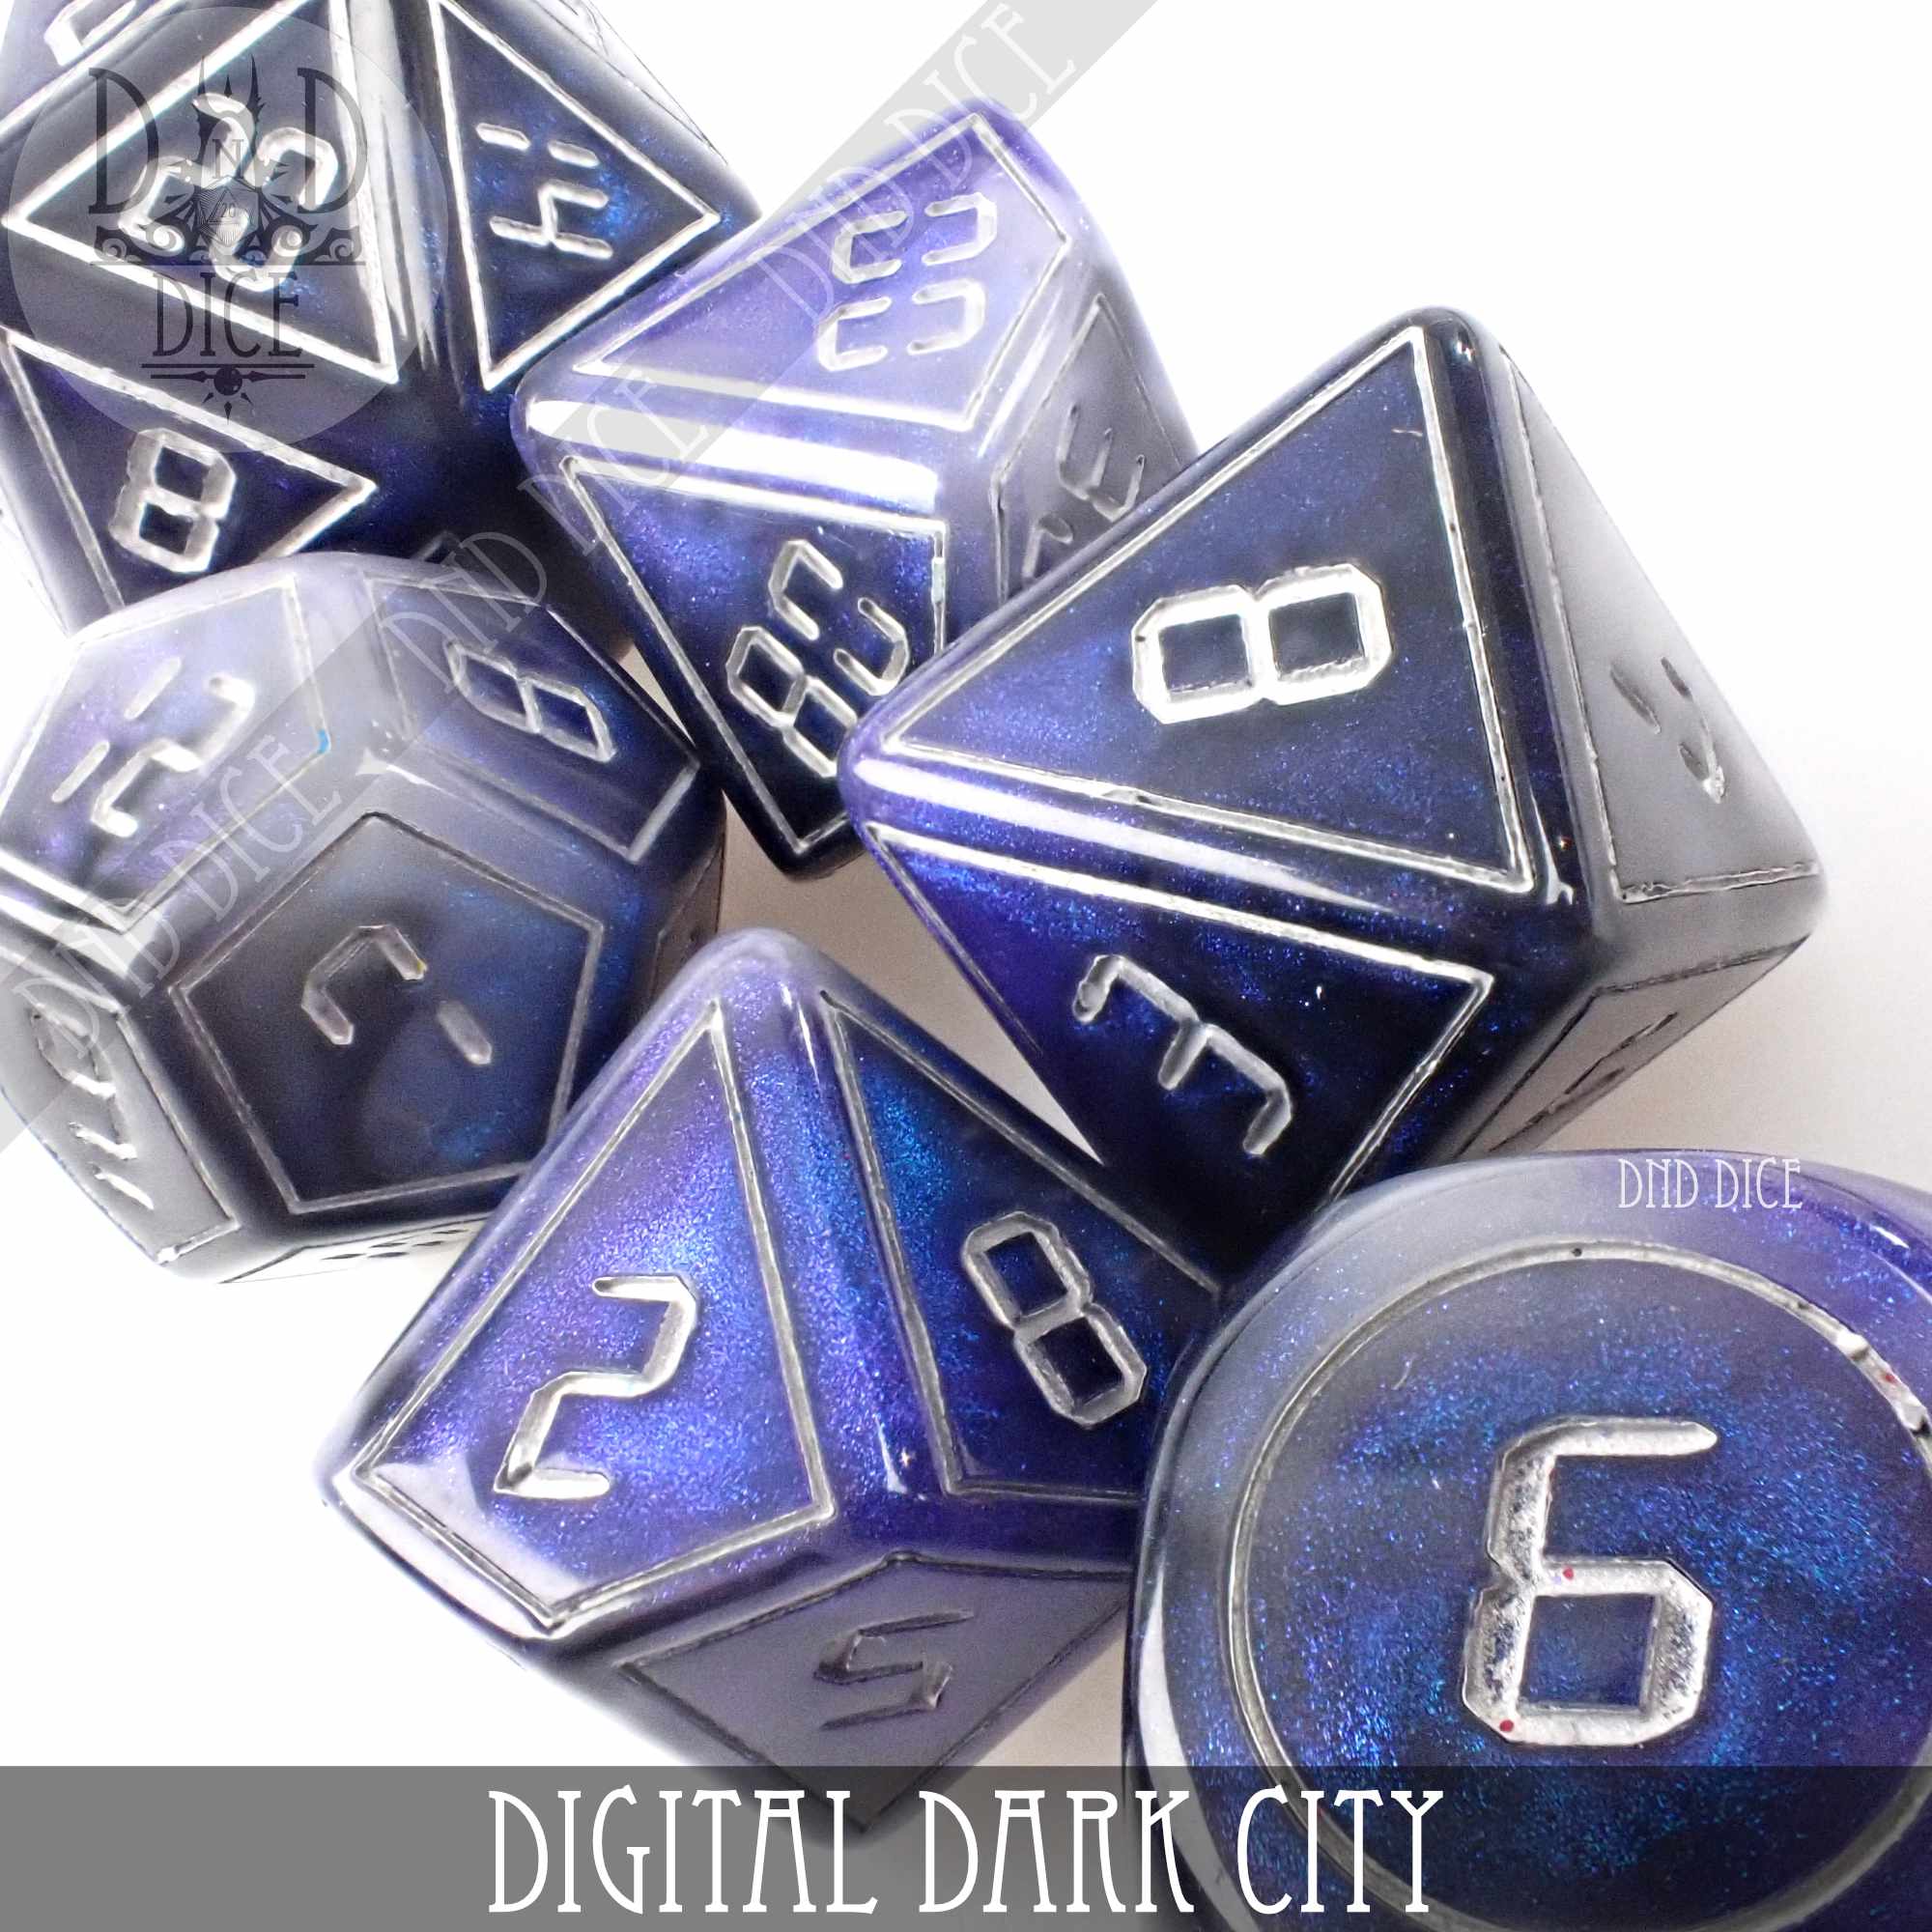 Digital Dark City Dice Set